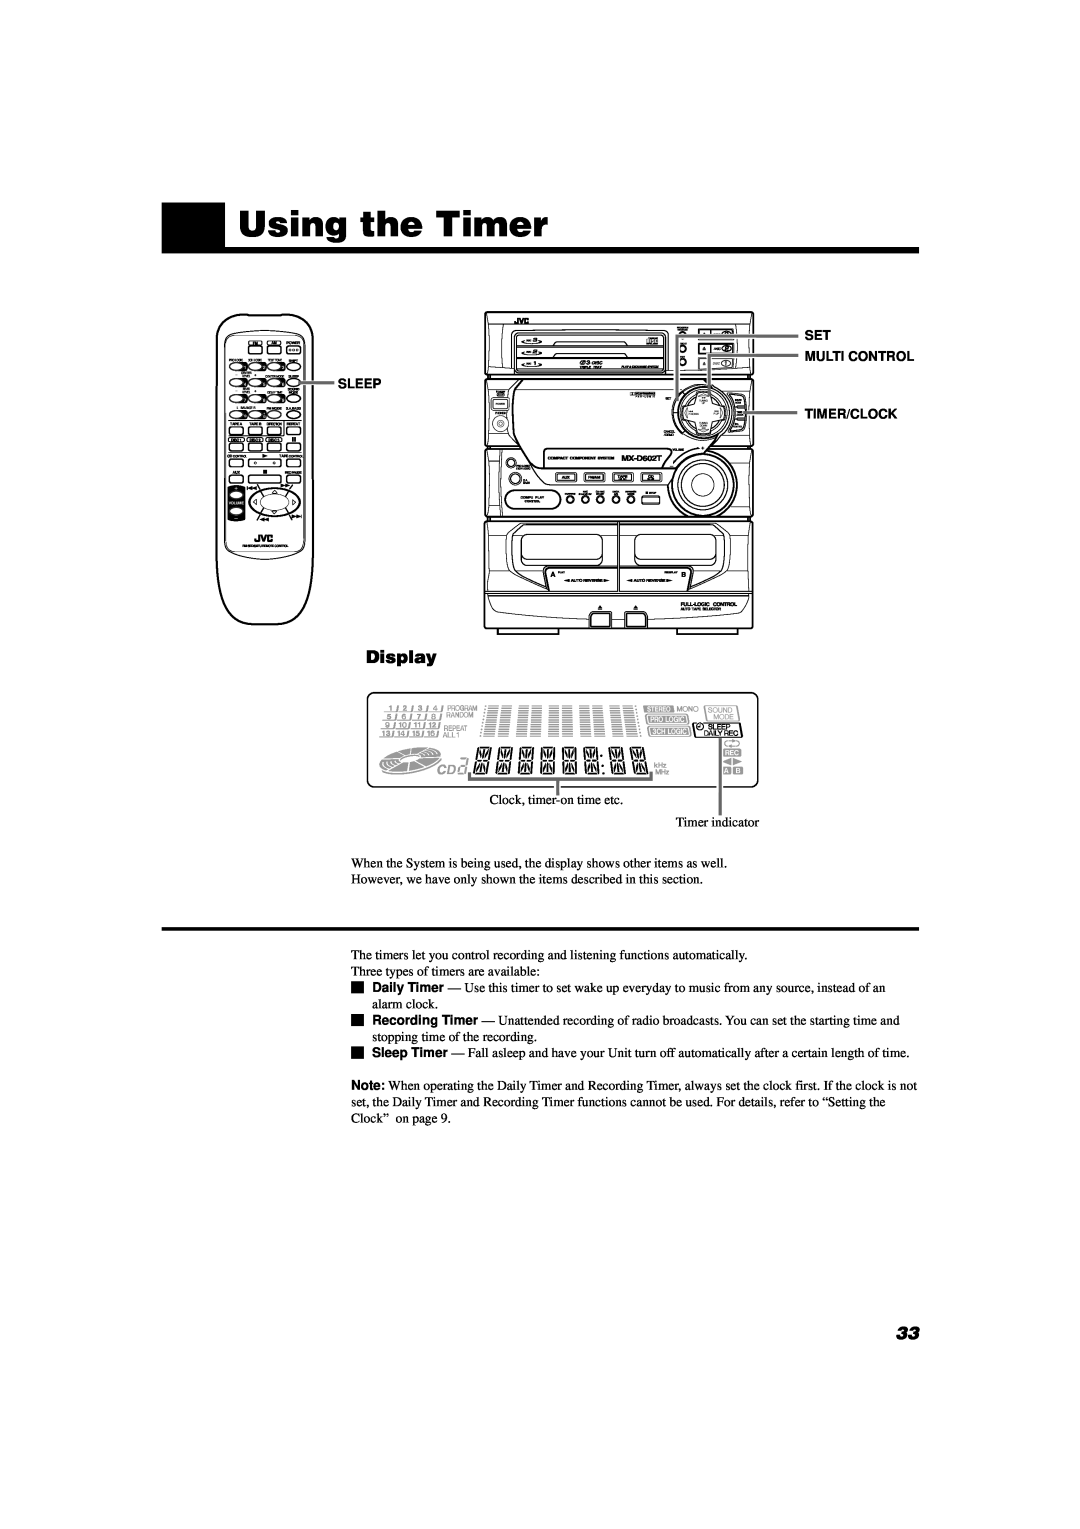 JVC MX-D602T manual Using the Timer, Sleep, Set Multi Control Timer/Clock 